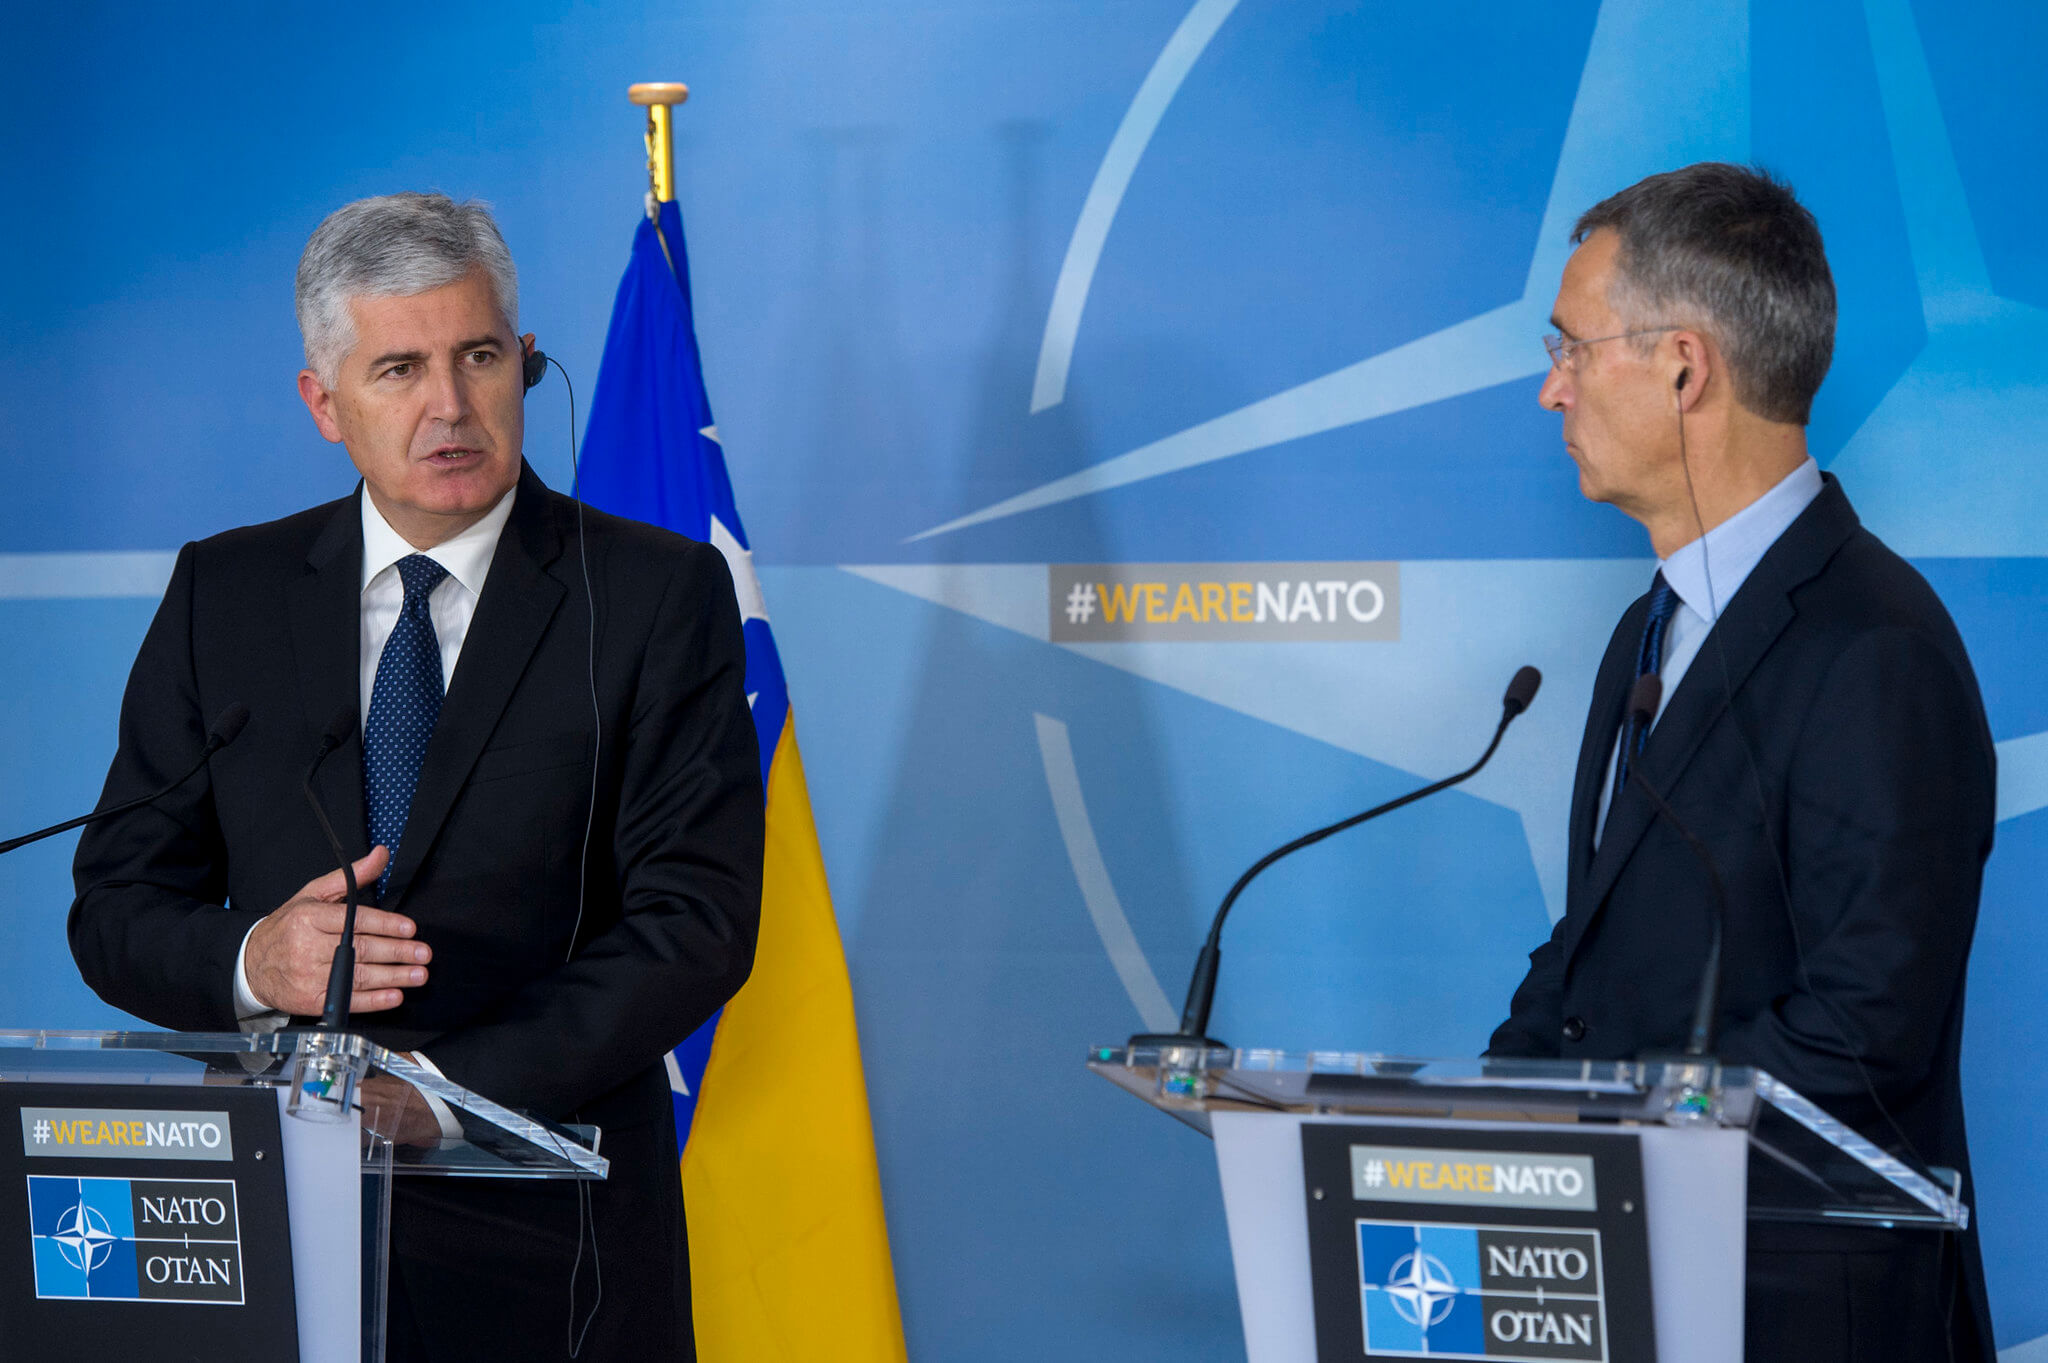 Mujanovic -  Chairman of the Presidency of Bosnia and Herzegovina Dragan Covic with NATO Secretary General Jens Stoltenberg in 2017. NATO